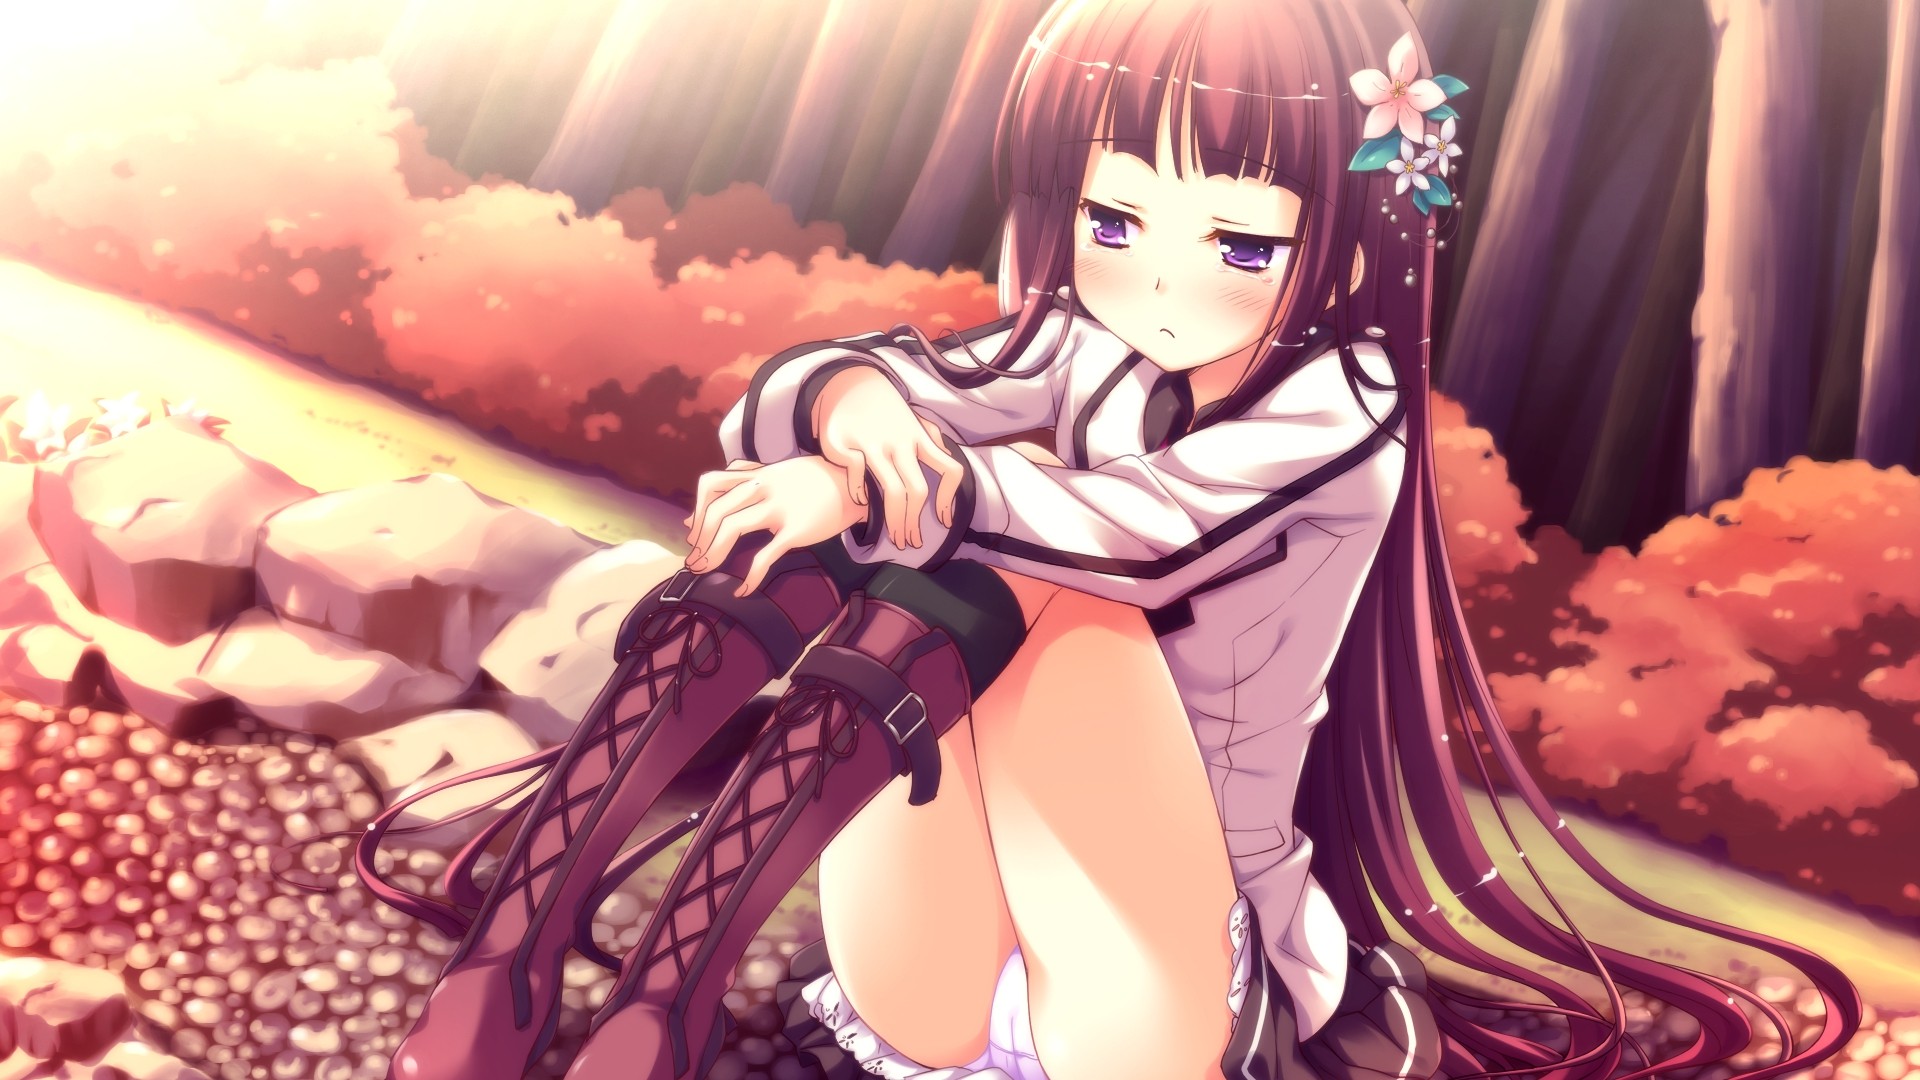 Anime 1920x1080 anime girls anime purple eyes long hair flower in hair panties sitting white panties legs together outdoors